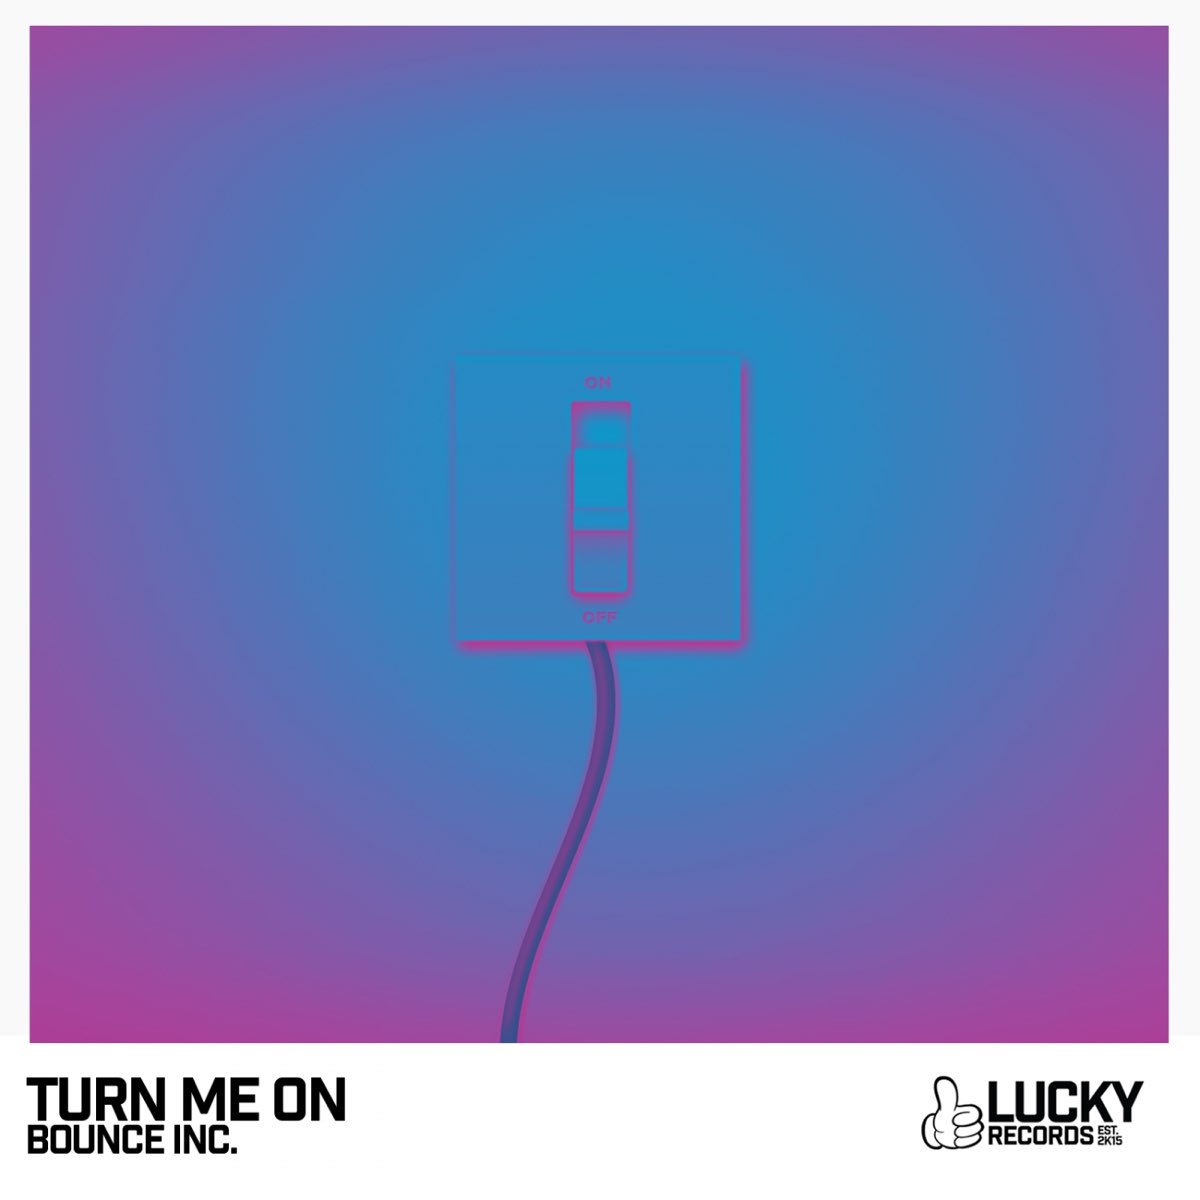 Песня my turn. Turn me on turn me on песня 2016. "Bounce Inc." && ( исполнитель | группа | музыка | Music | Band | artist ) && (фото | photo).